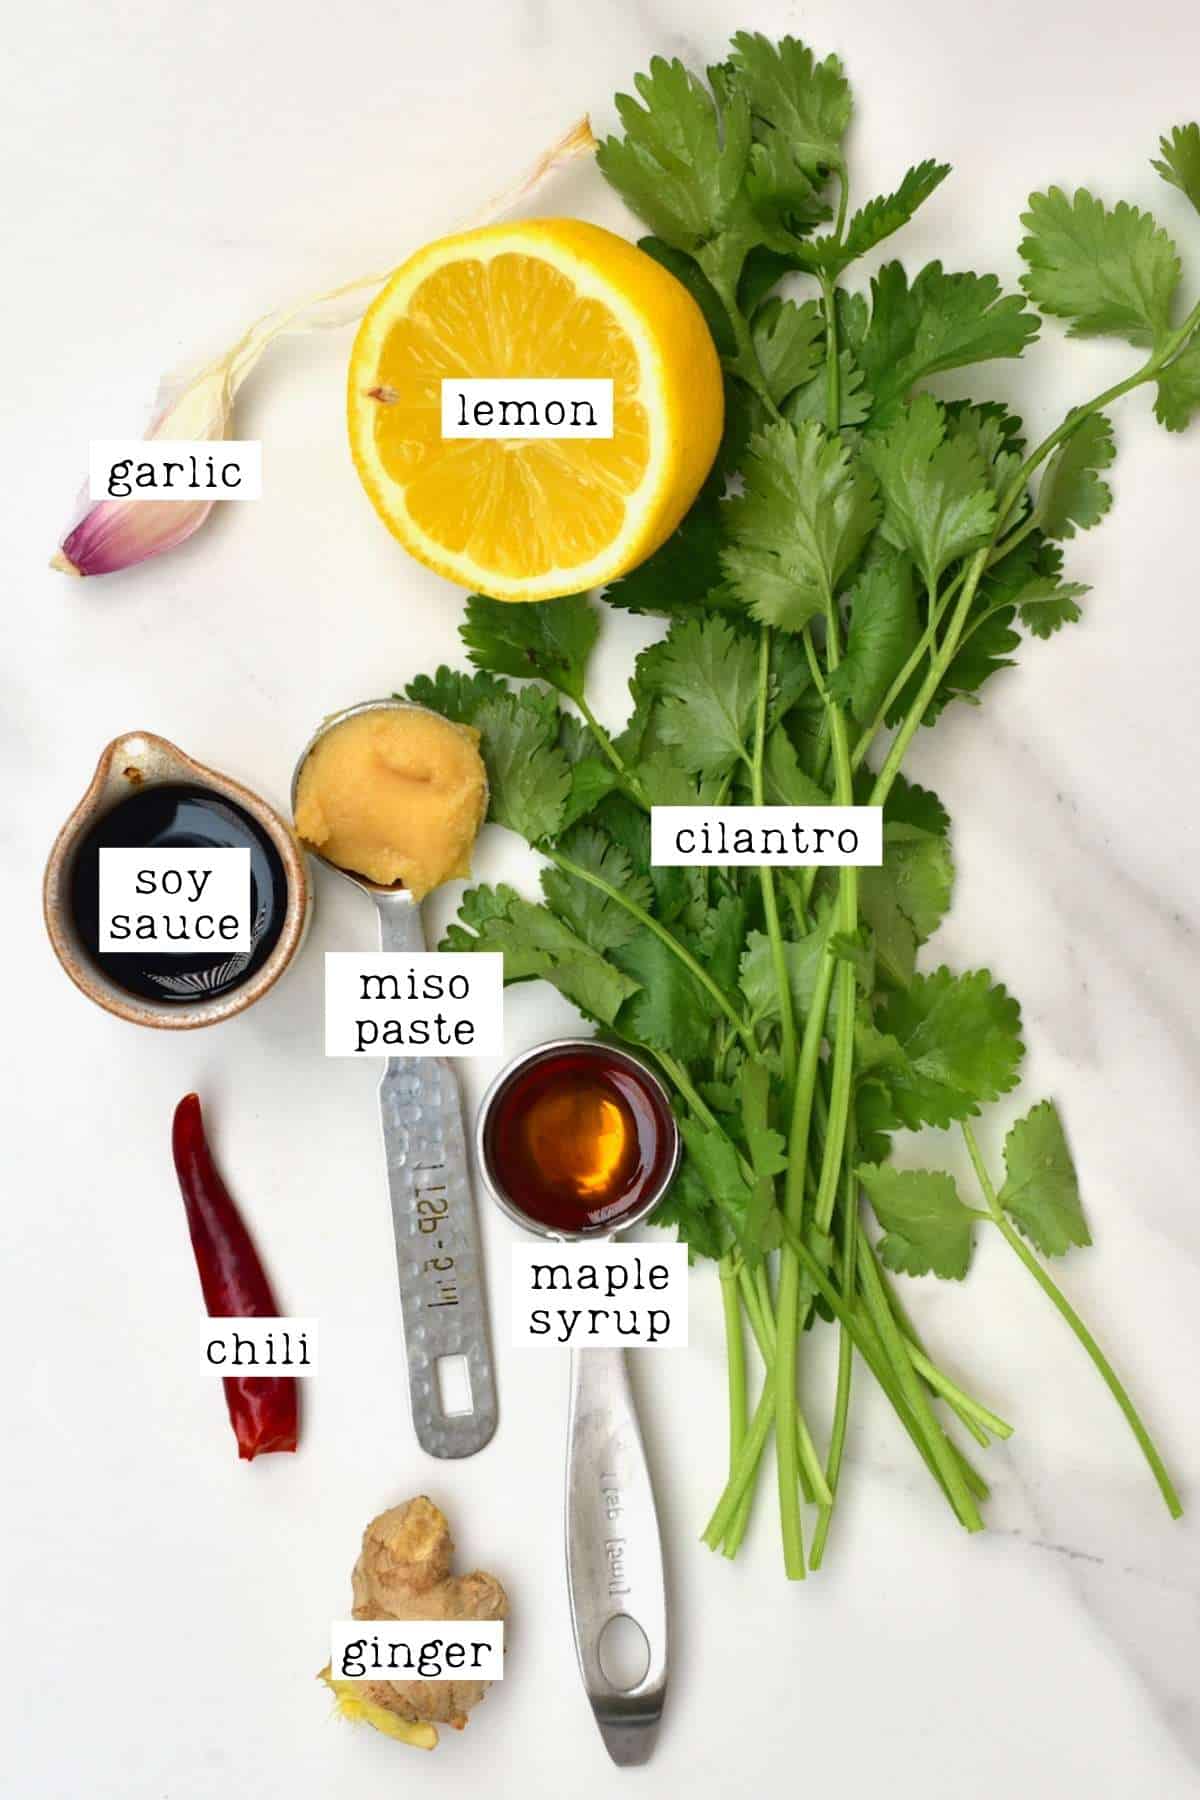 Ingredients for salad dressing